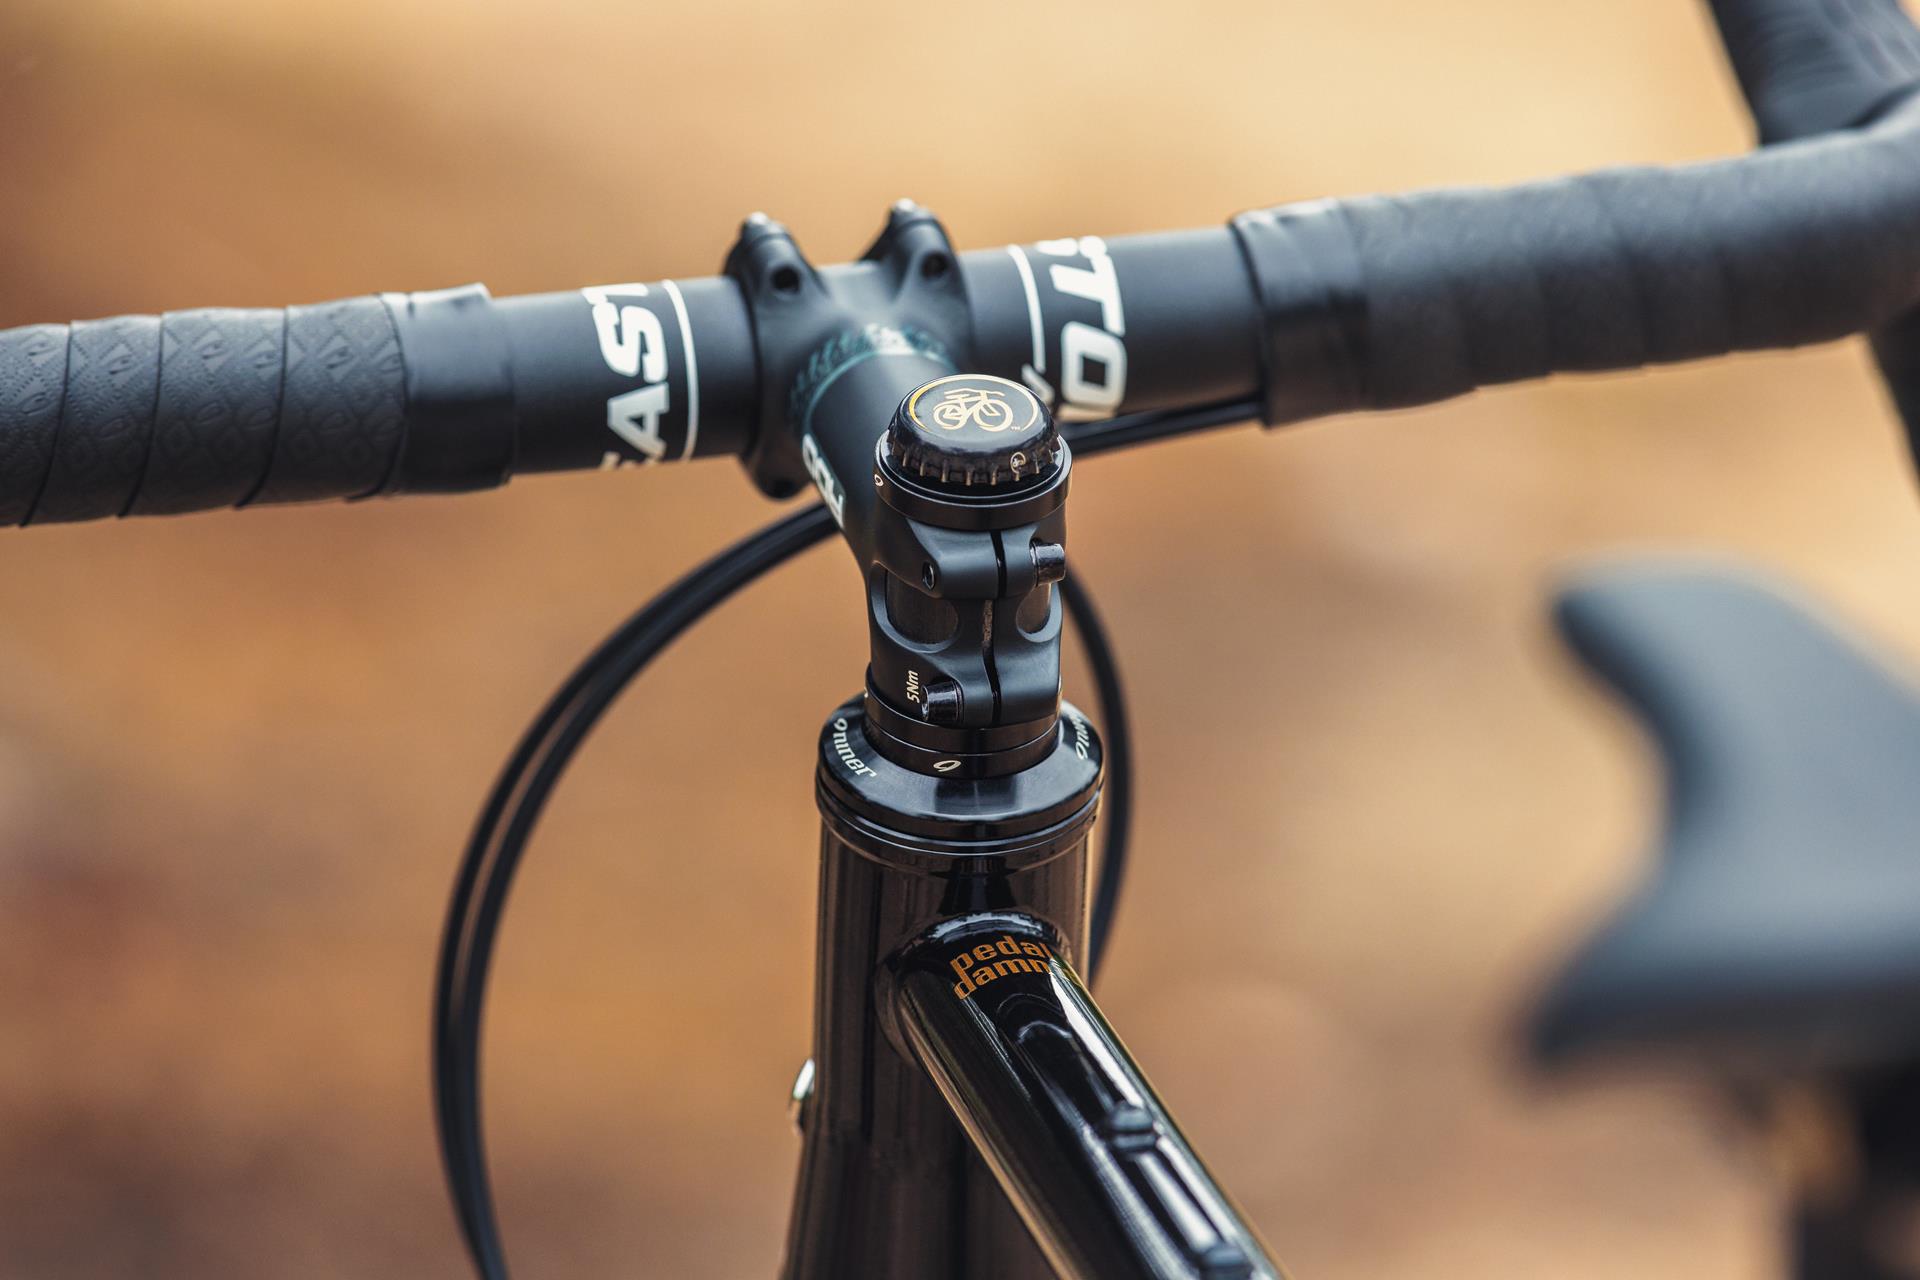 Niner RLT 2-star велосипед, черная бронза, 62